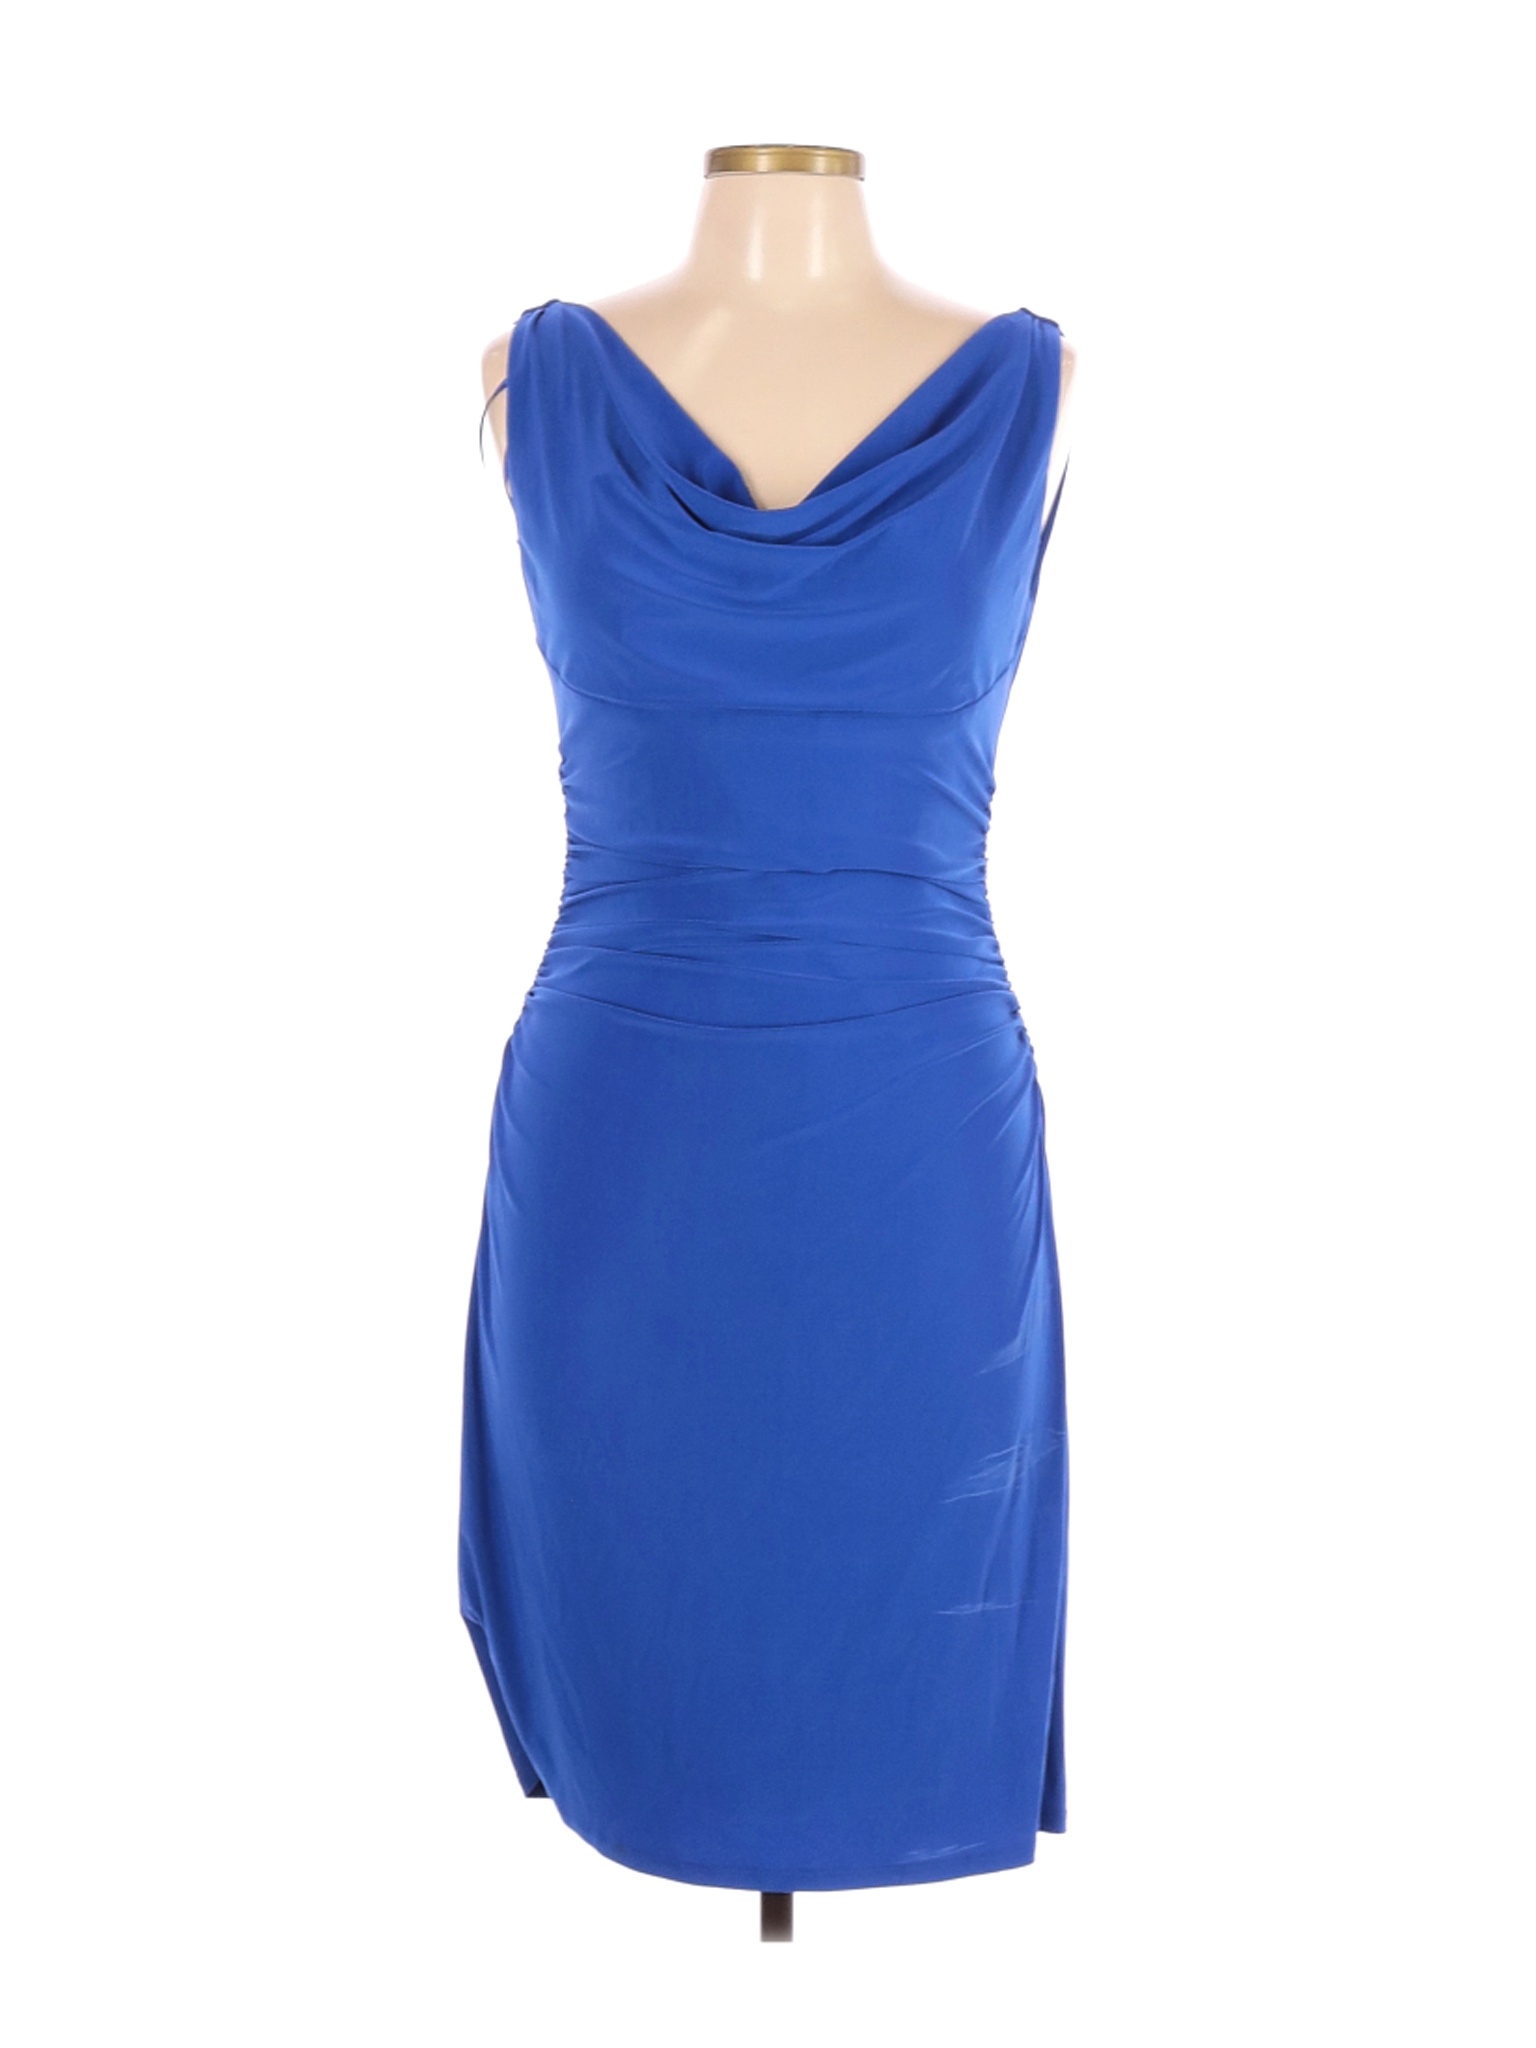 Lauren by Ralph Lauren Women Blue Casual Dress 8 | eBay